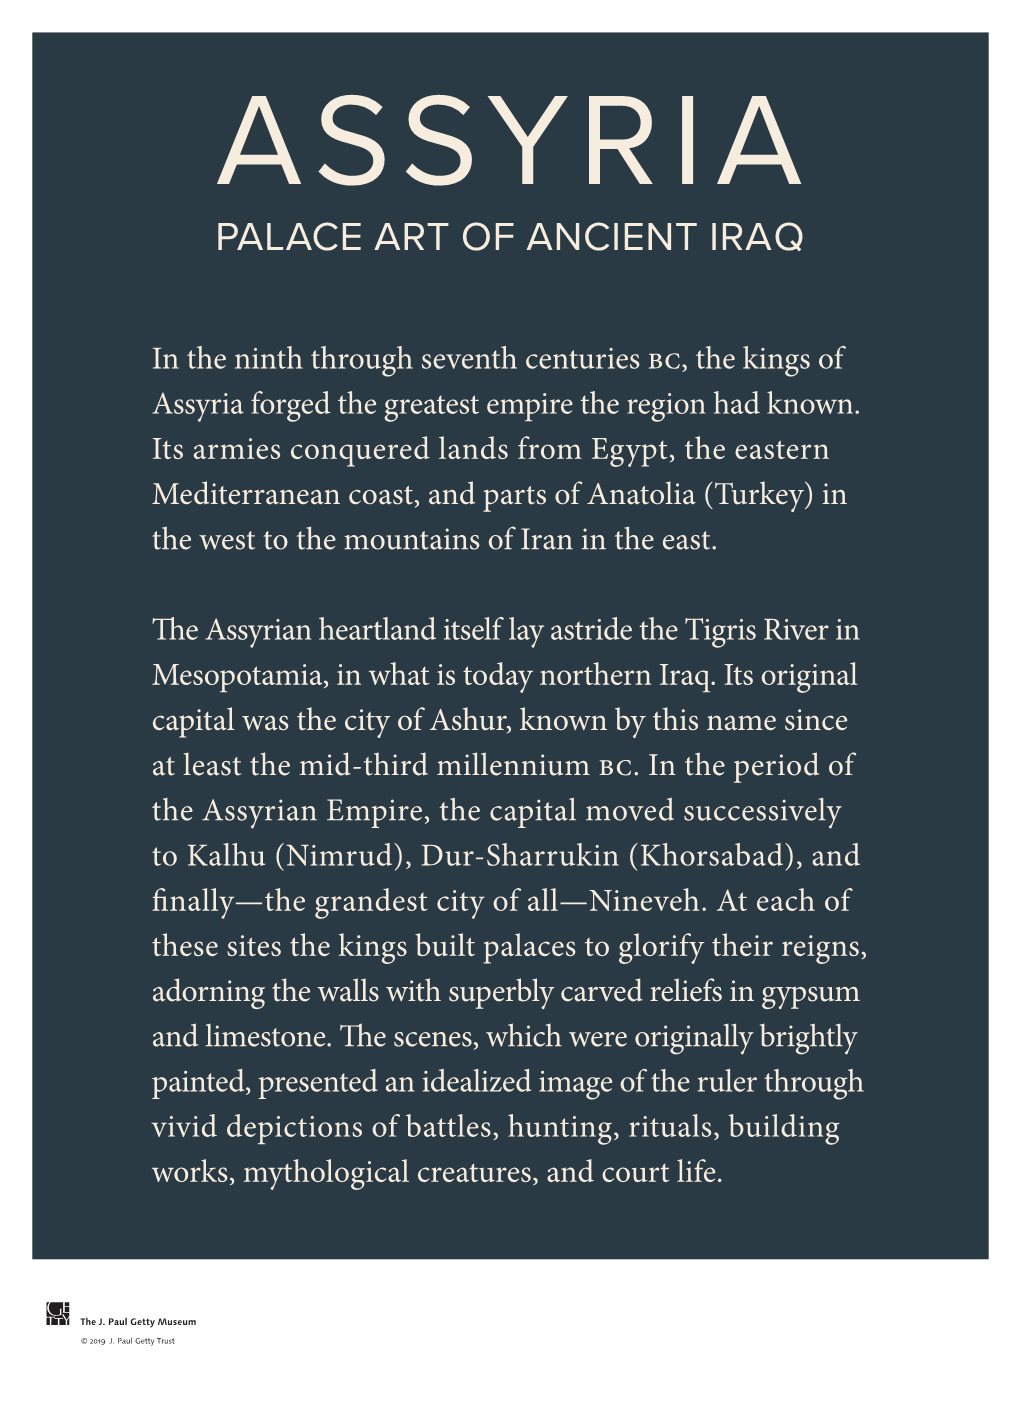 Assyria: Palace Art of Ancient Iraq, October 2, 2019–September 5, 2022, at the Getty Villa